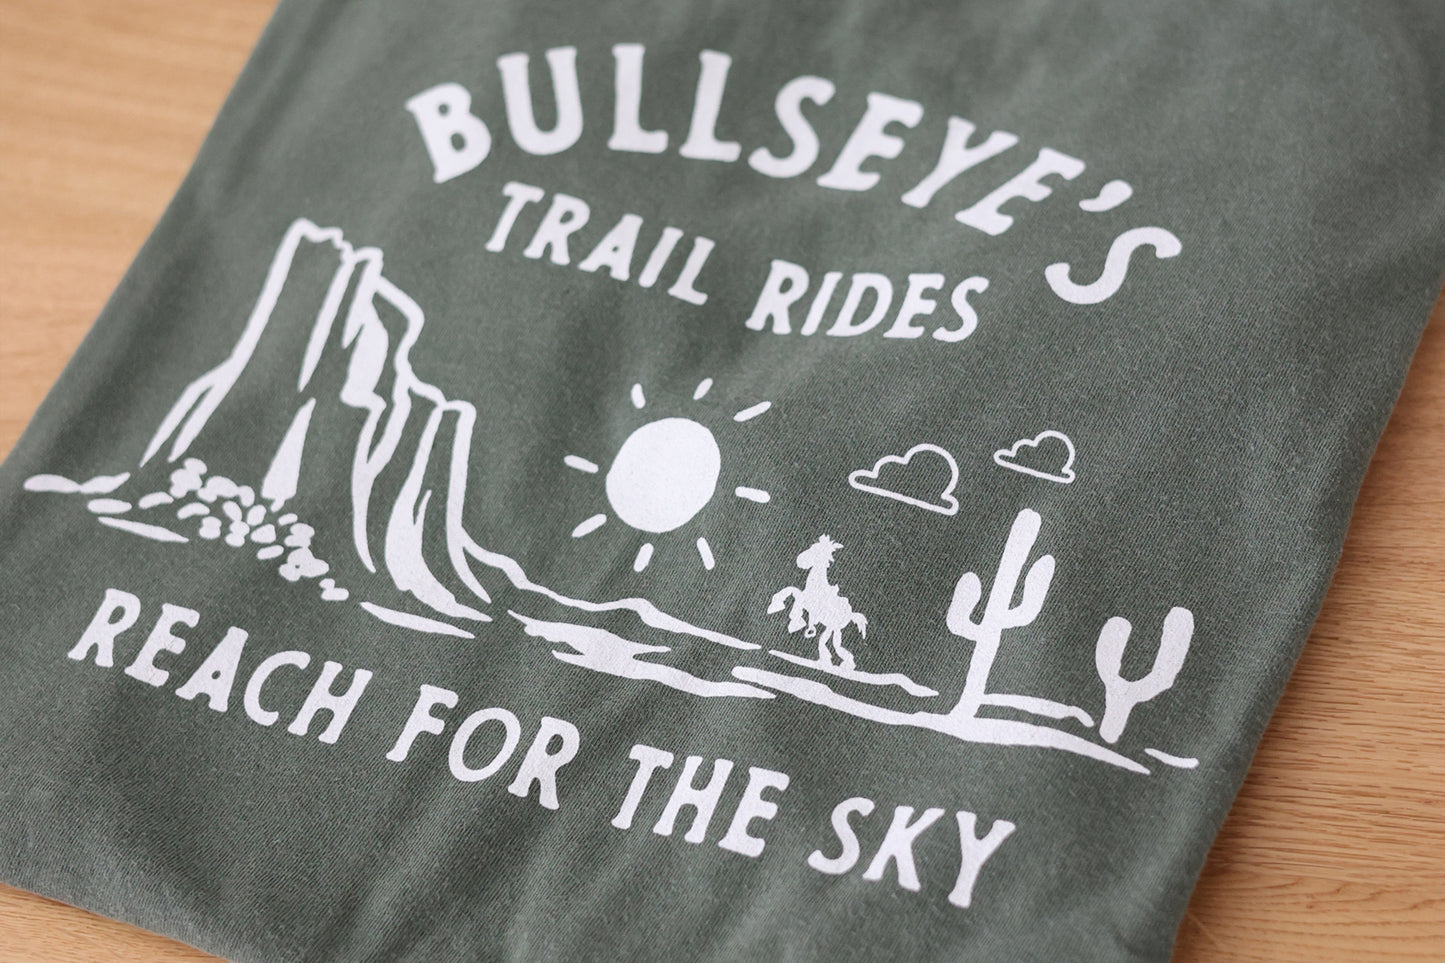 Bullseye's Trail Rides Unisex Shirt